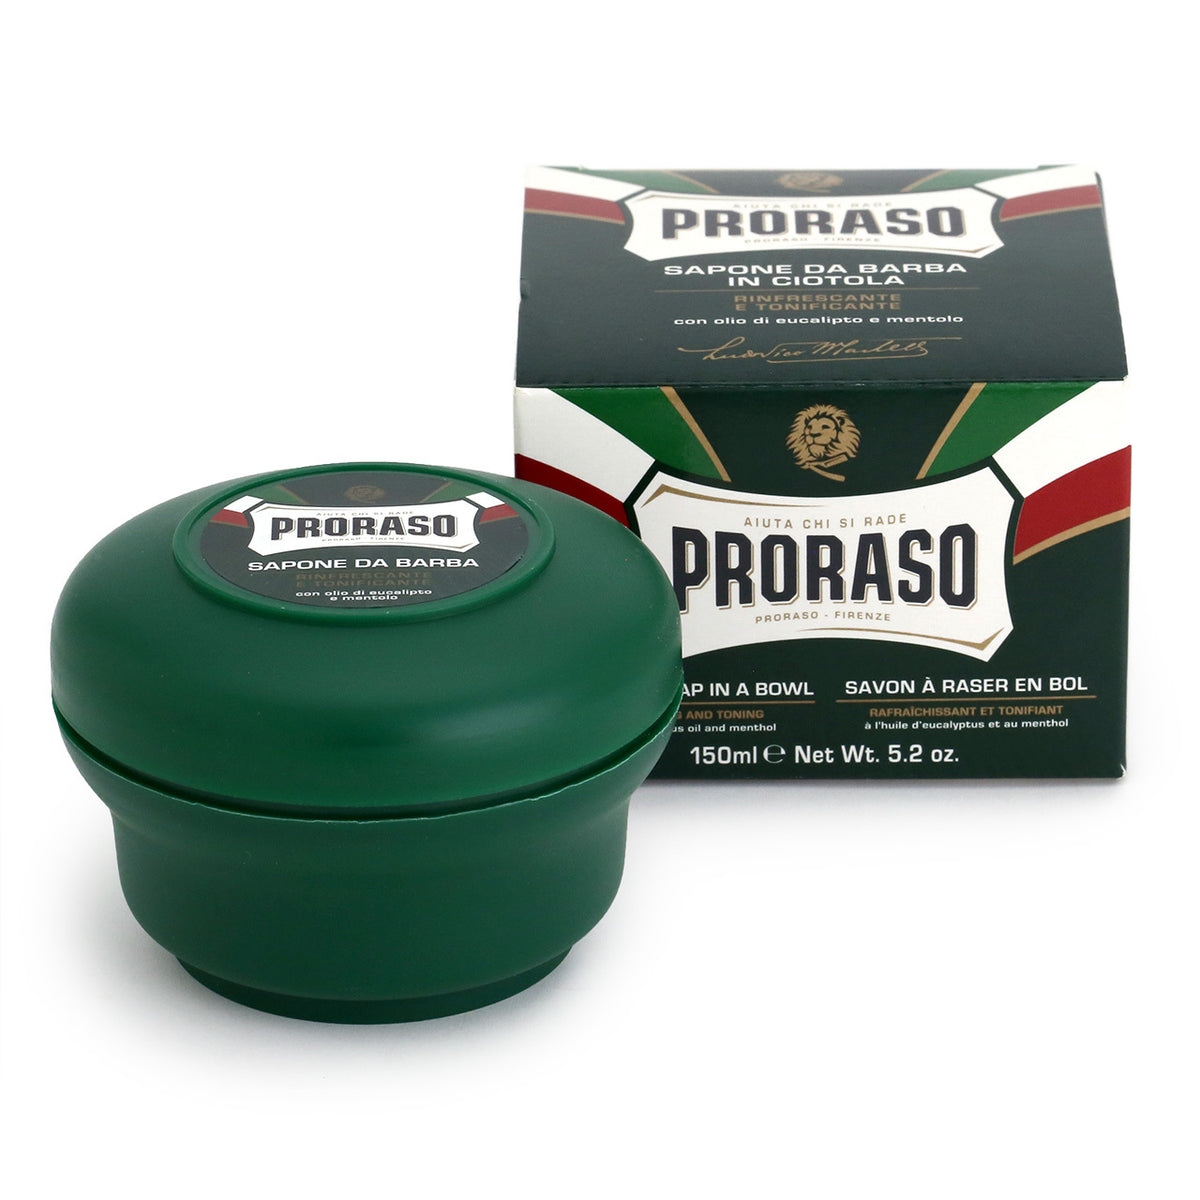 Proraso Shaving Soap in Bowl 150ml - Eucalyptus &amp; Menthol